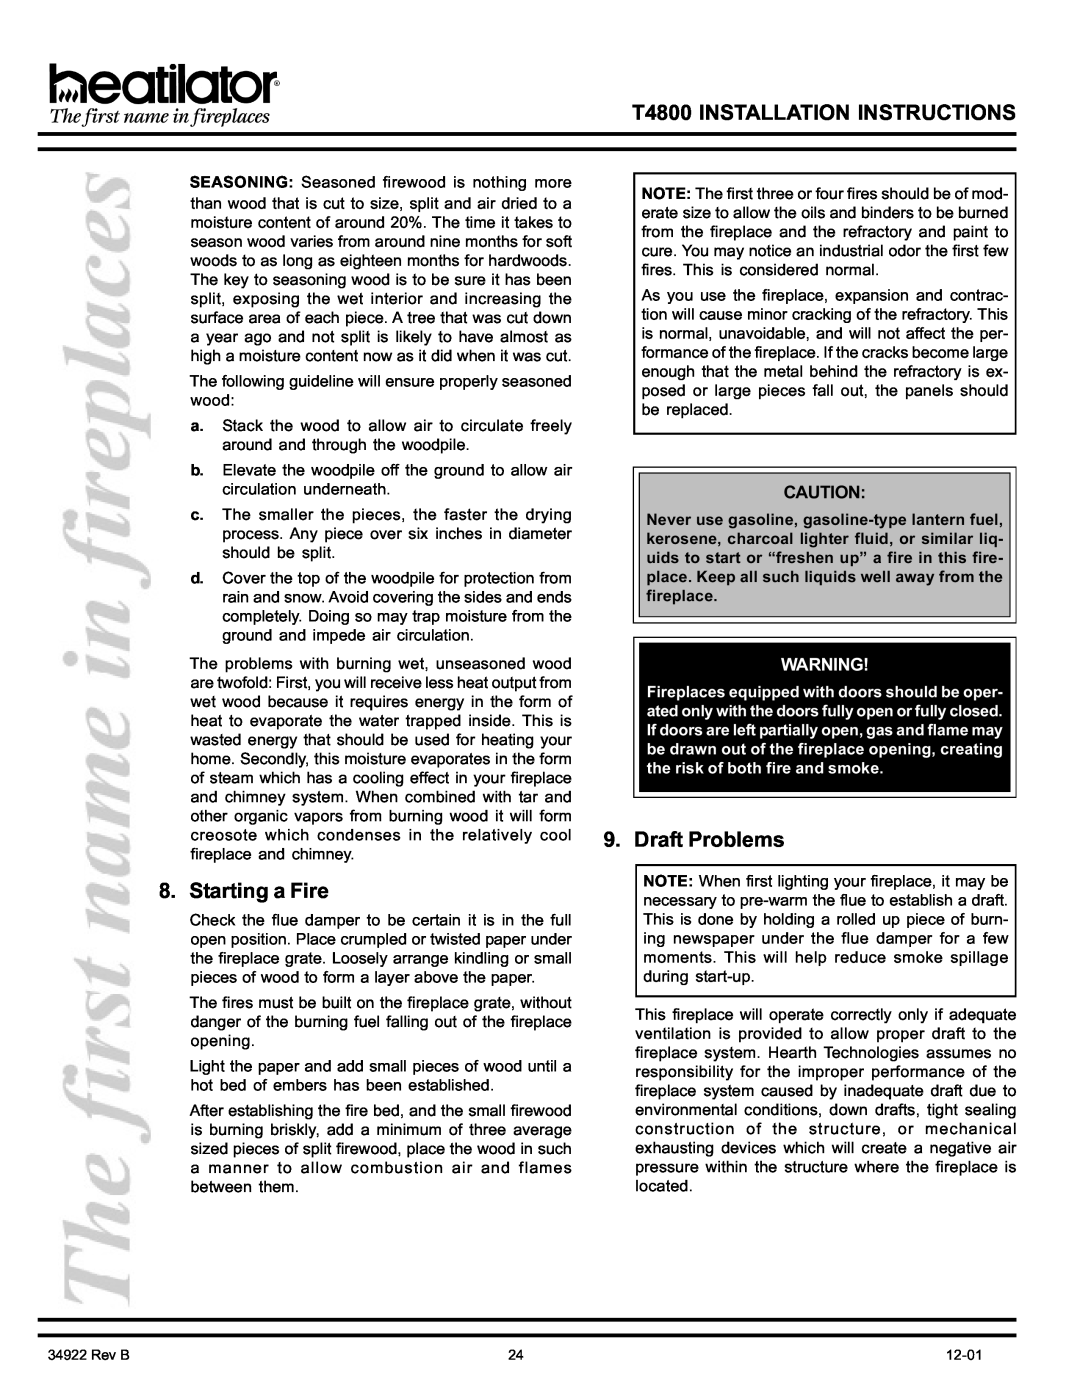 Heatiator manual Starting a Fire, Draft Problems, T4800 INSTALLATION INSTRUCTIONS, Rev B, 12-01 